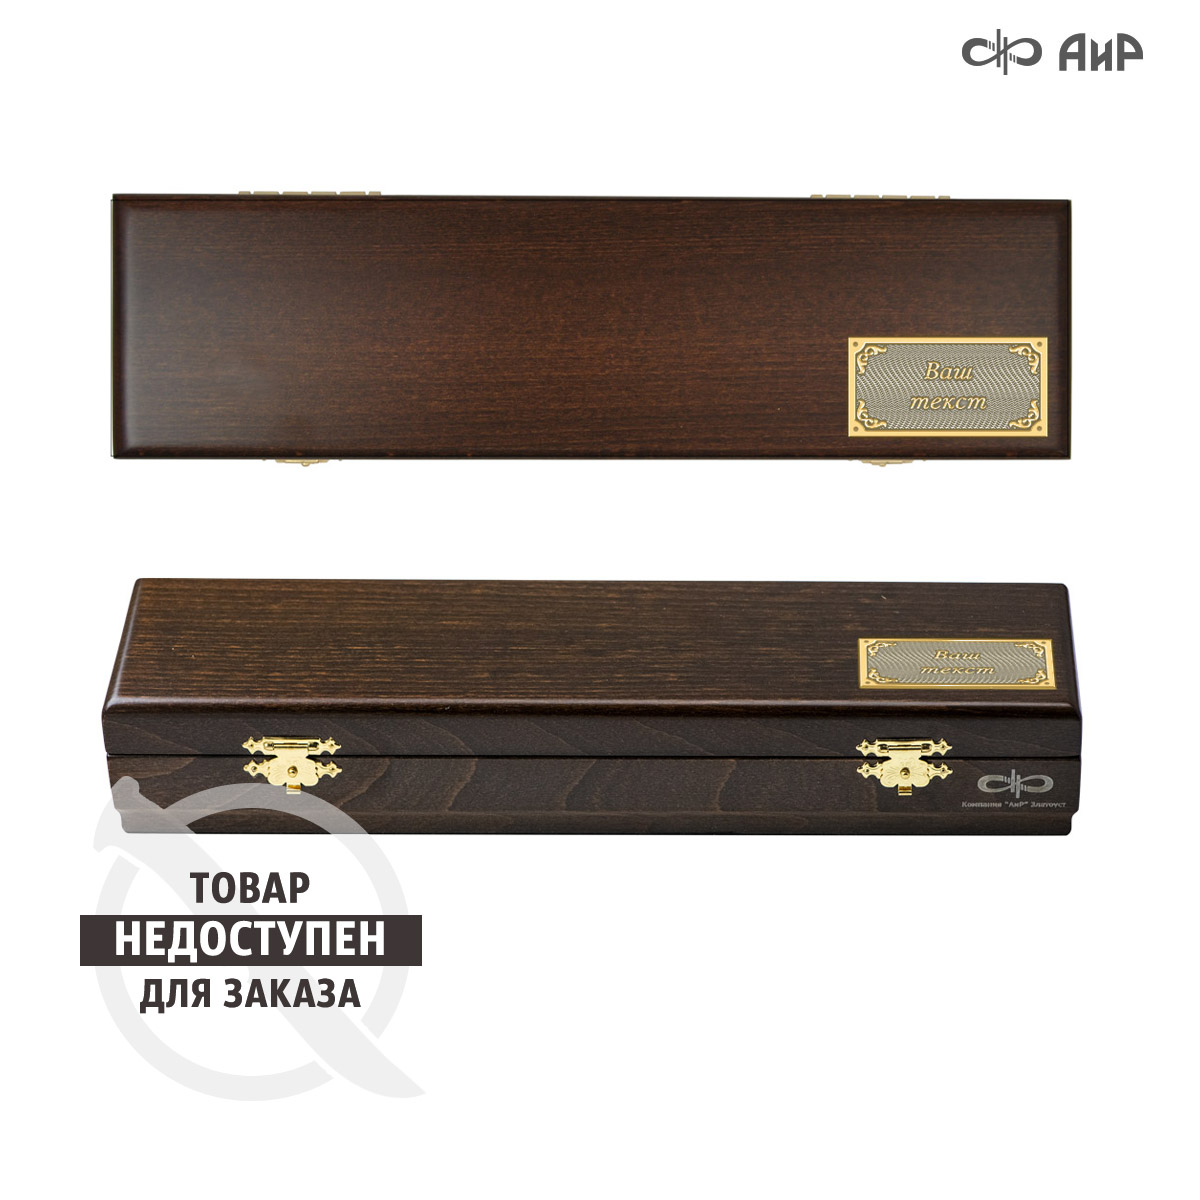 Коробка деревянная (укладка замша) с табличкой 70х35 мм (стандарт) - Компания «АиР»